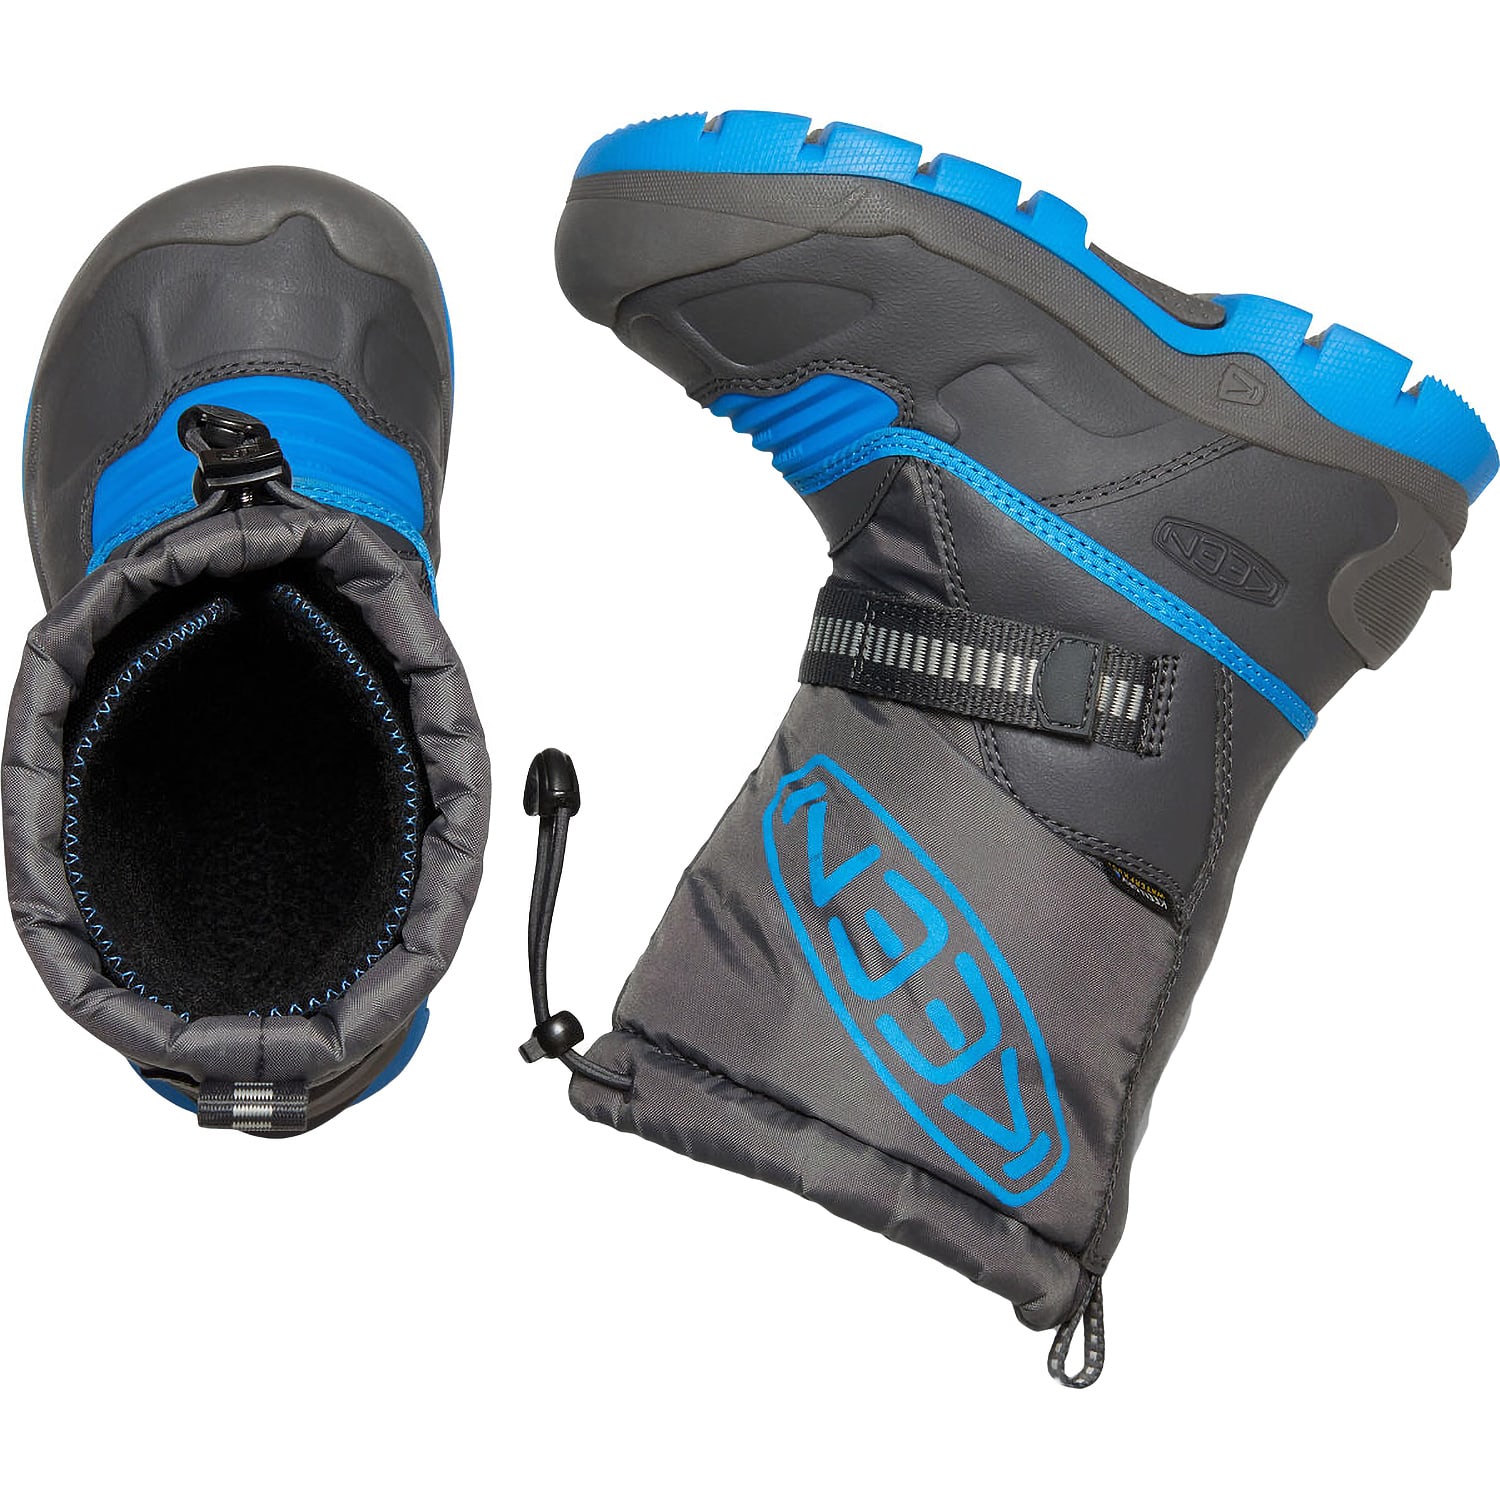 KEEN Children’s Snow Troll Waterproof Boots